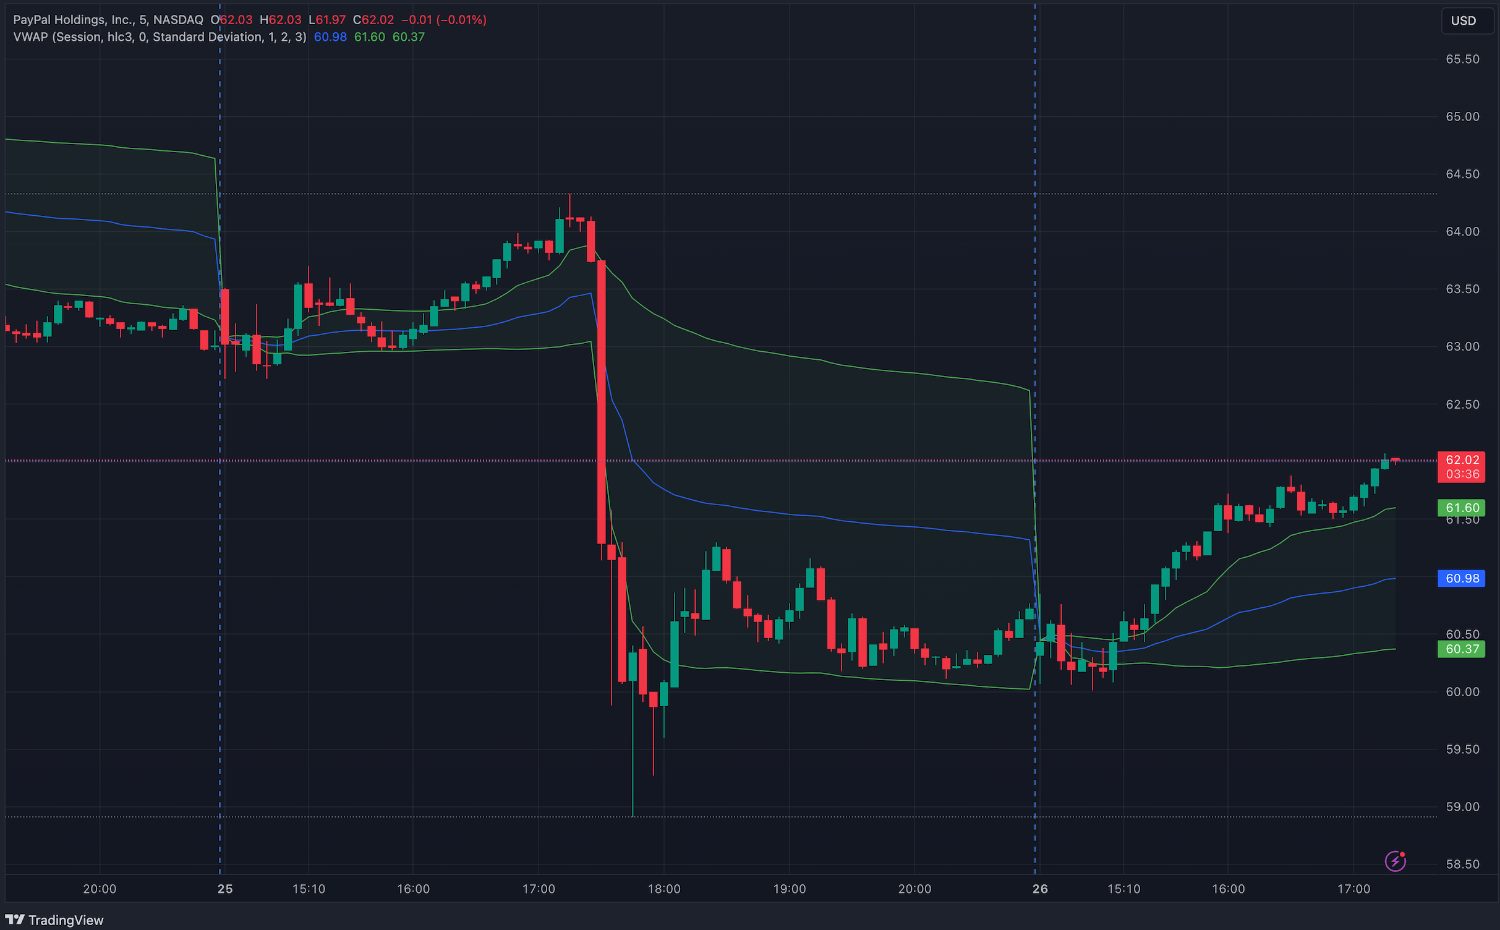 VWAP day trading indicator on chart